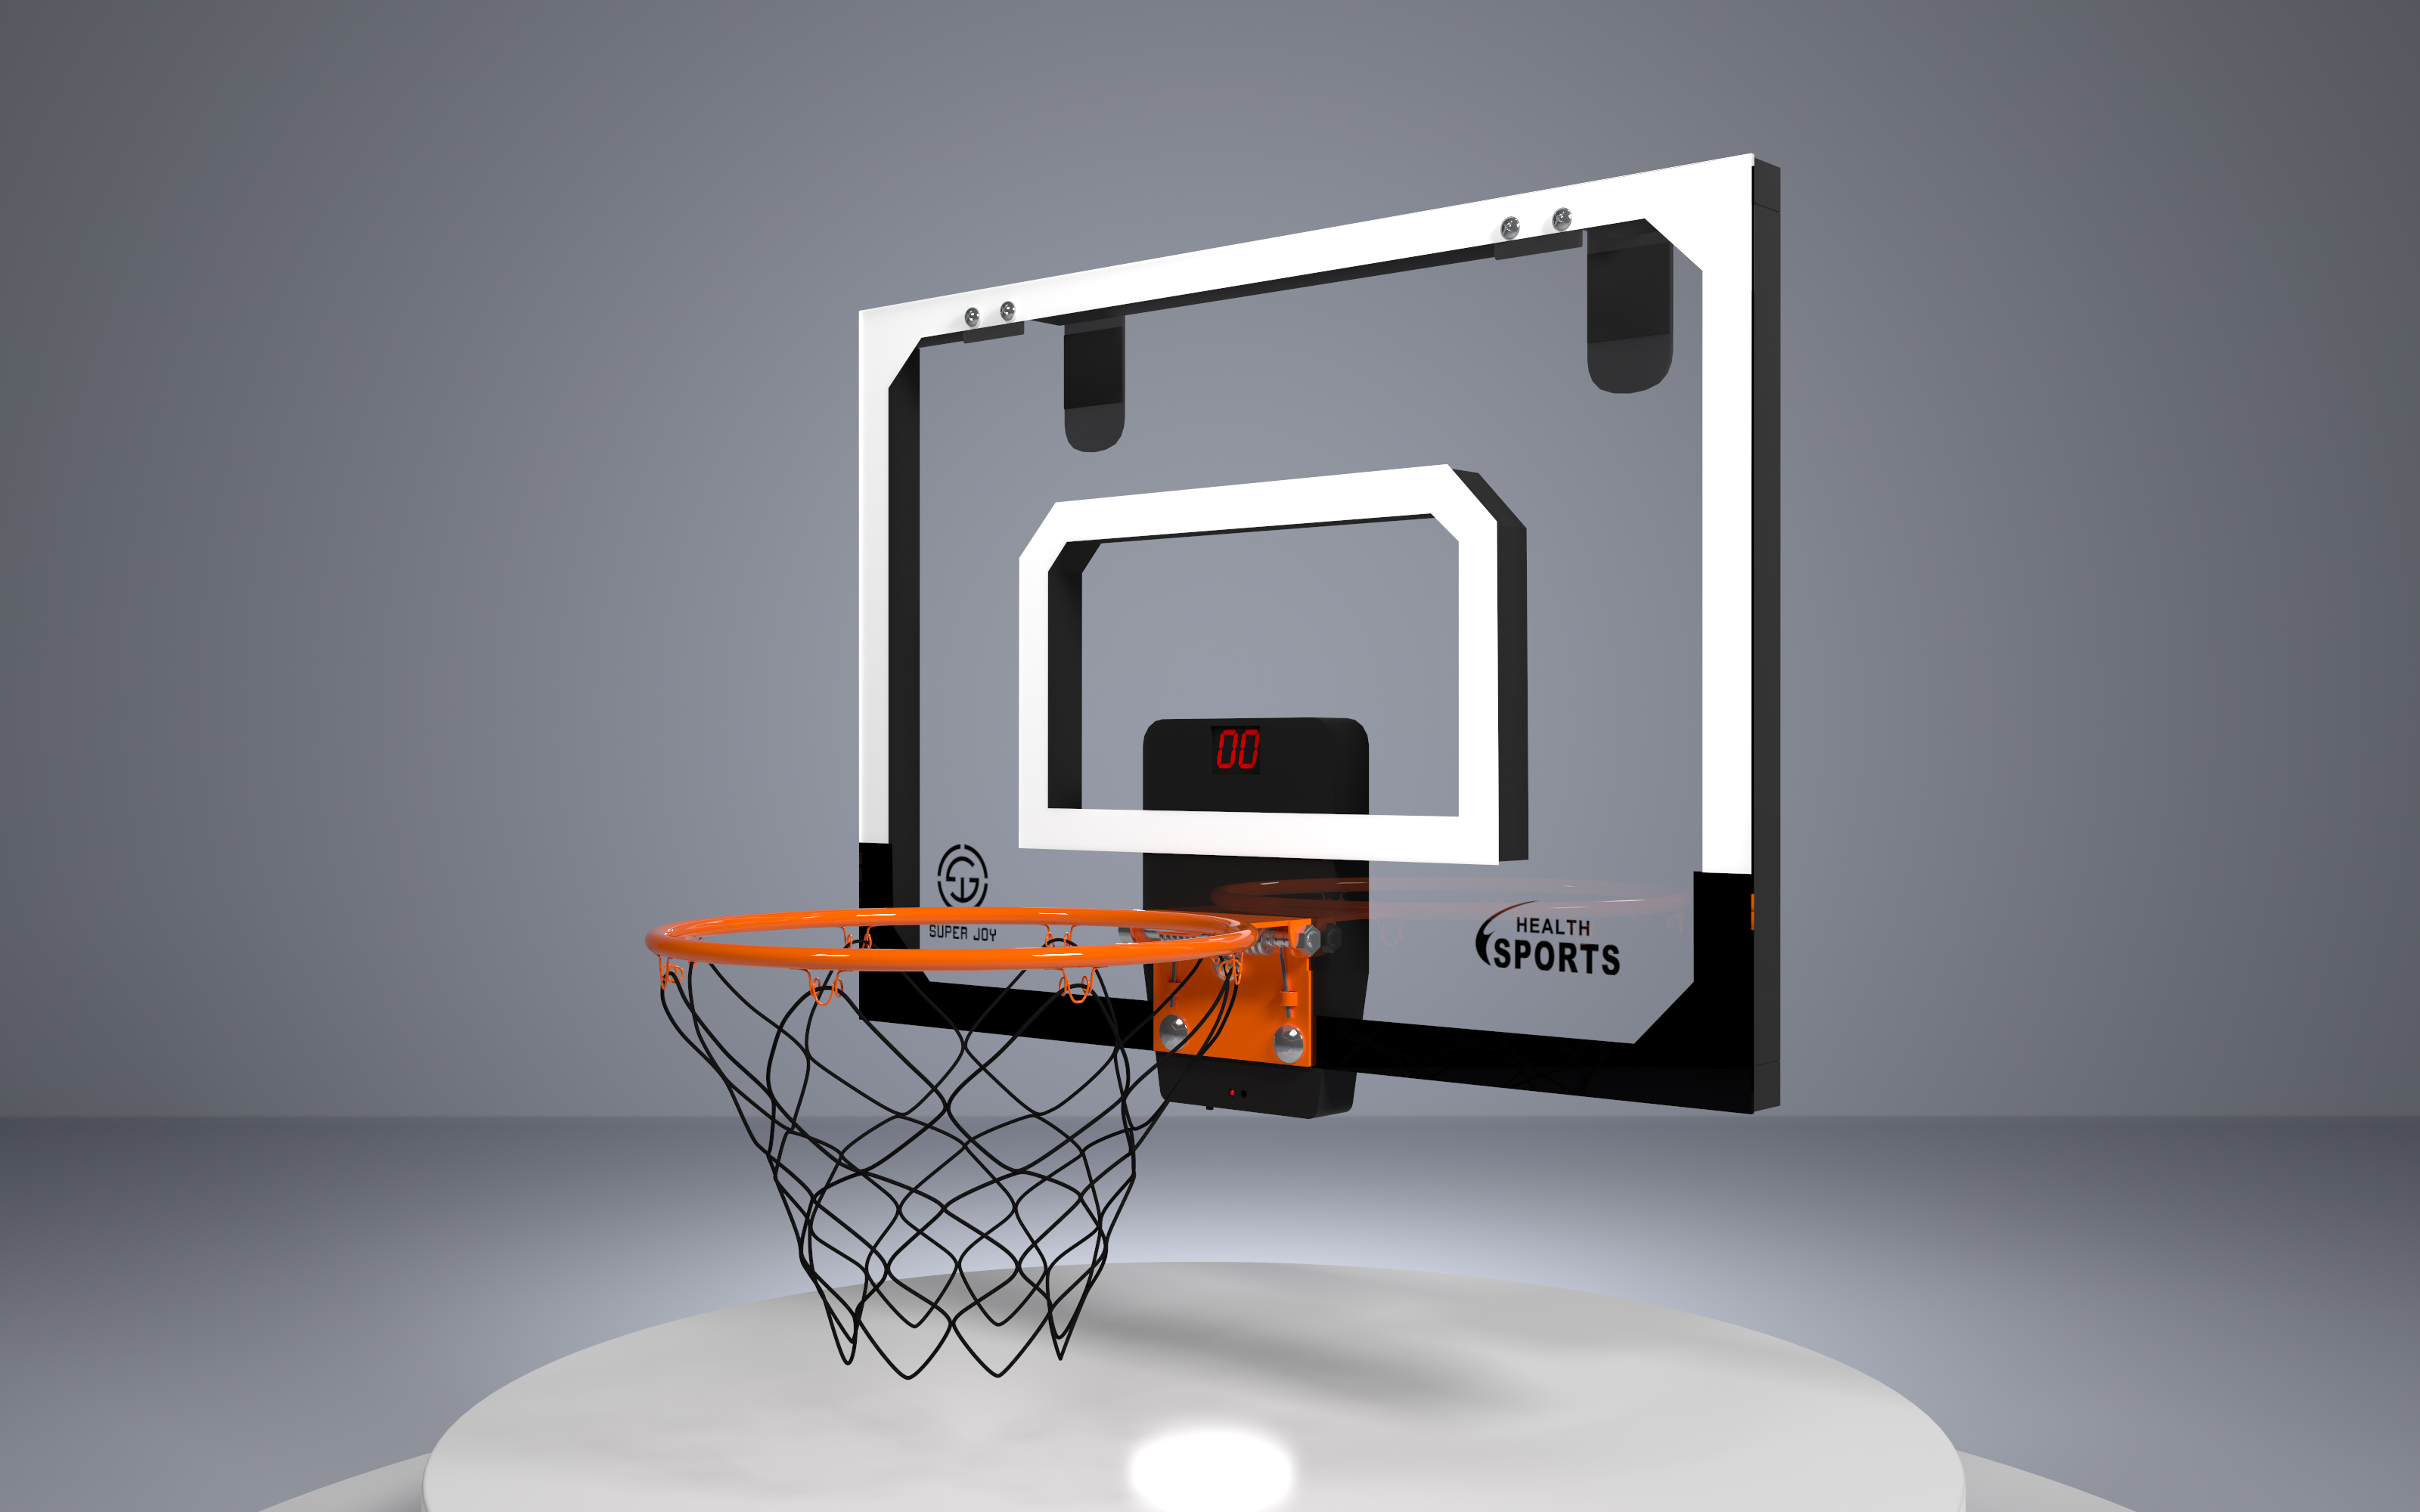 The LED Scoring Indoor Basketball Hoop - Hammacher Schlemmer